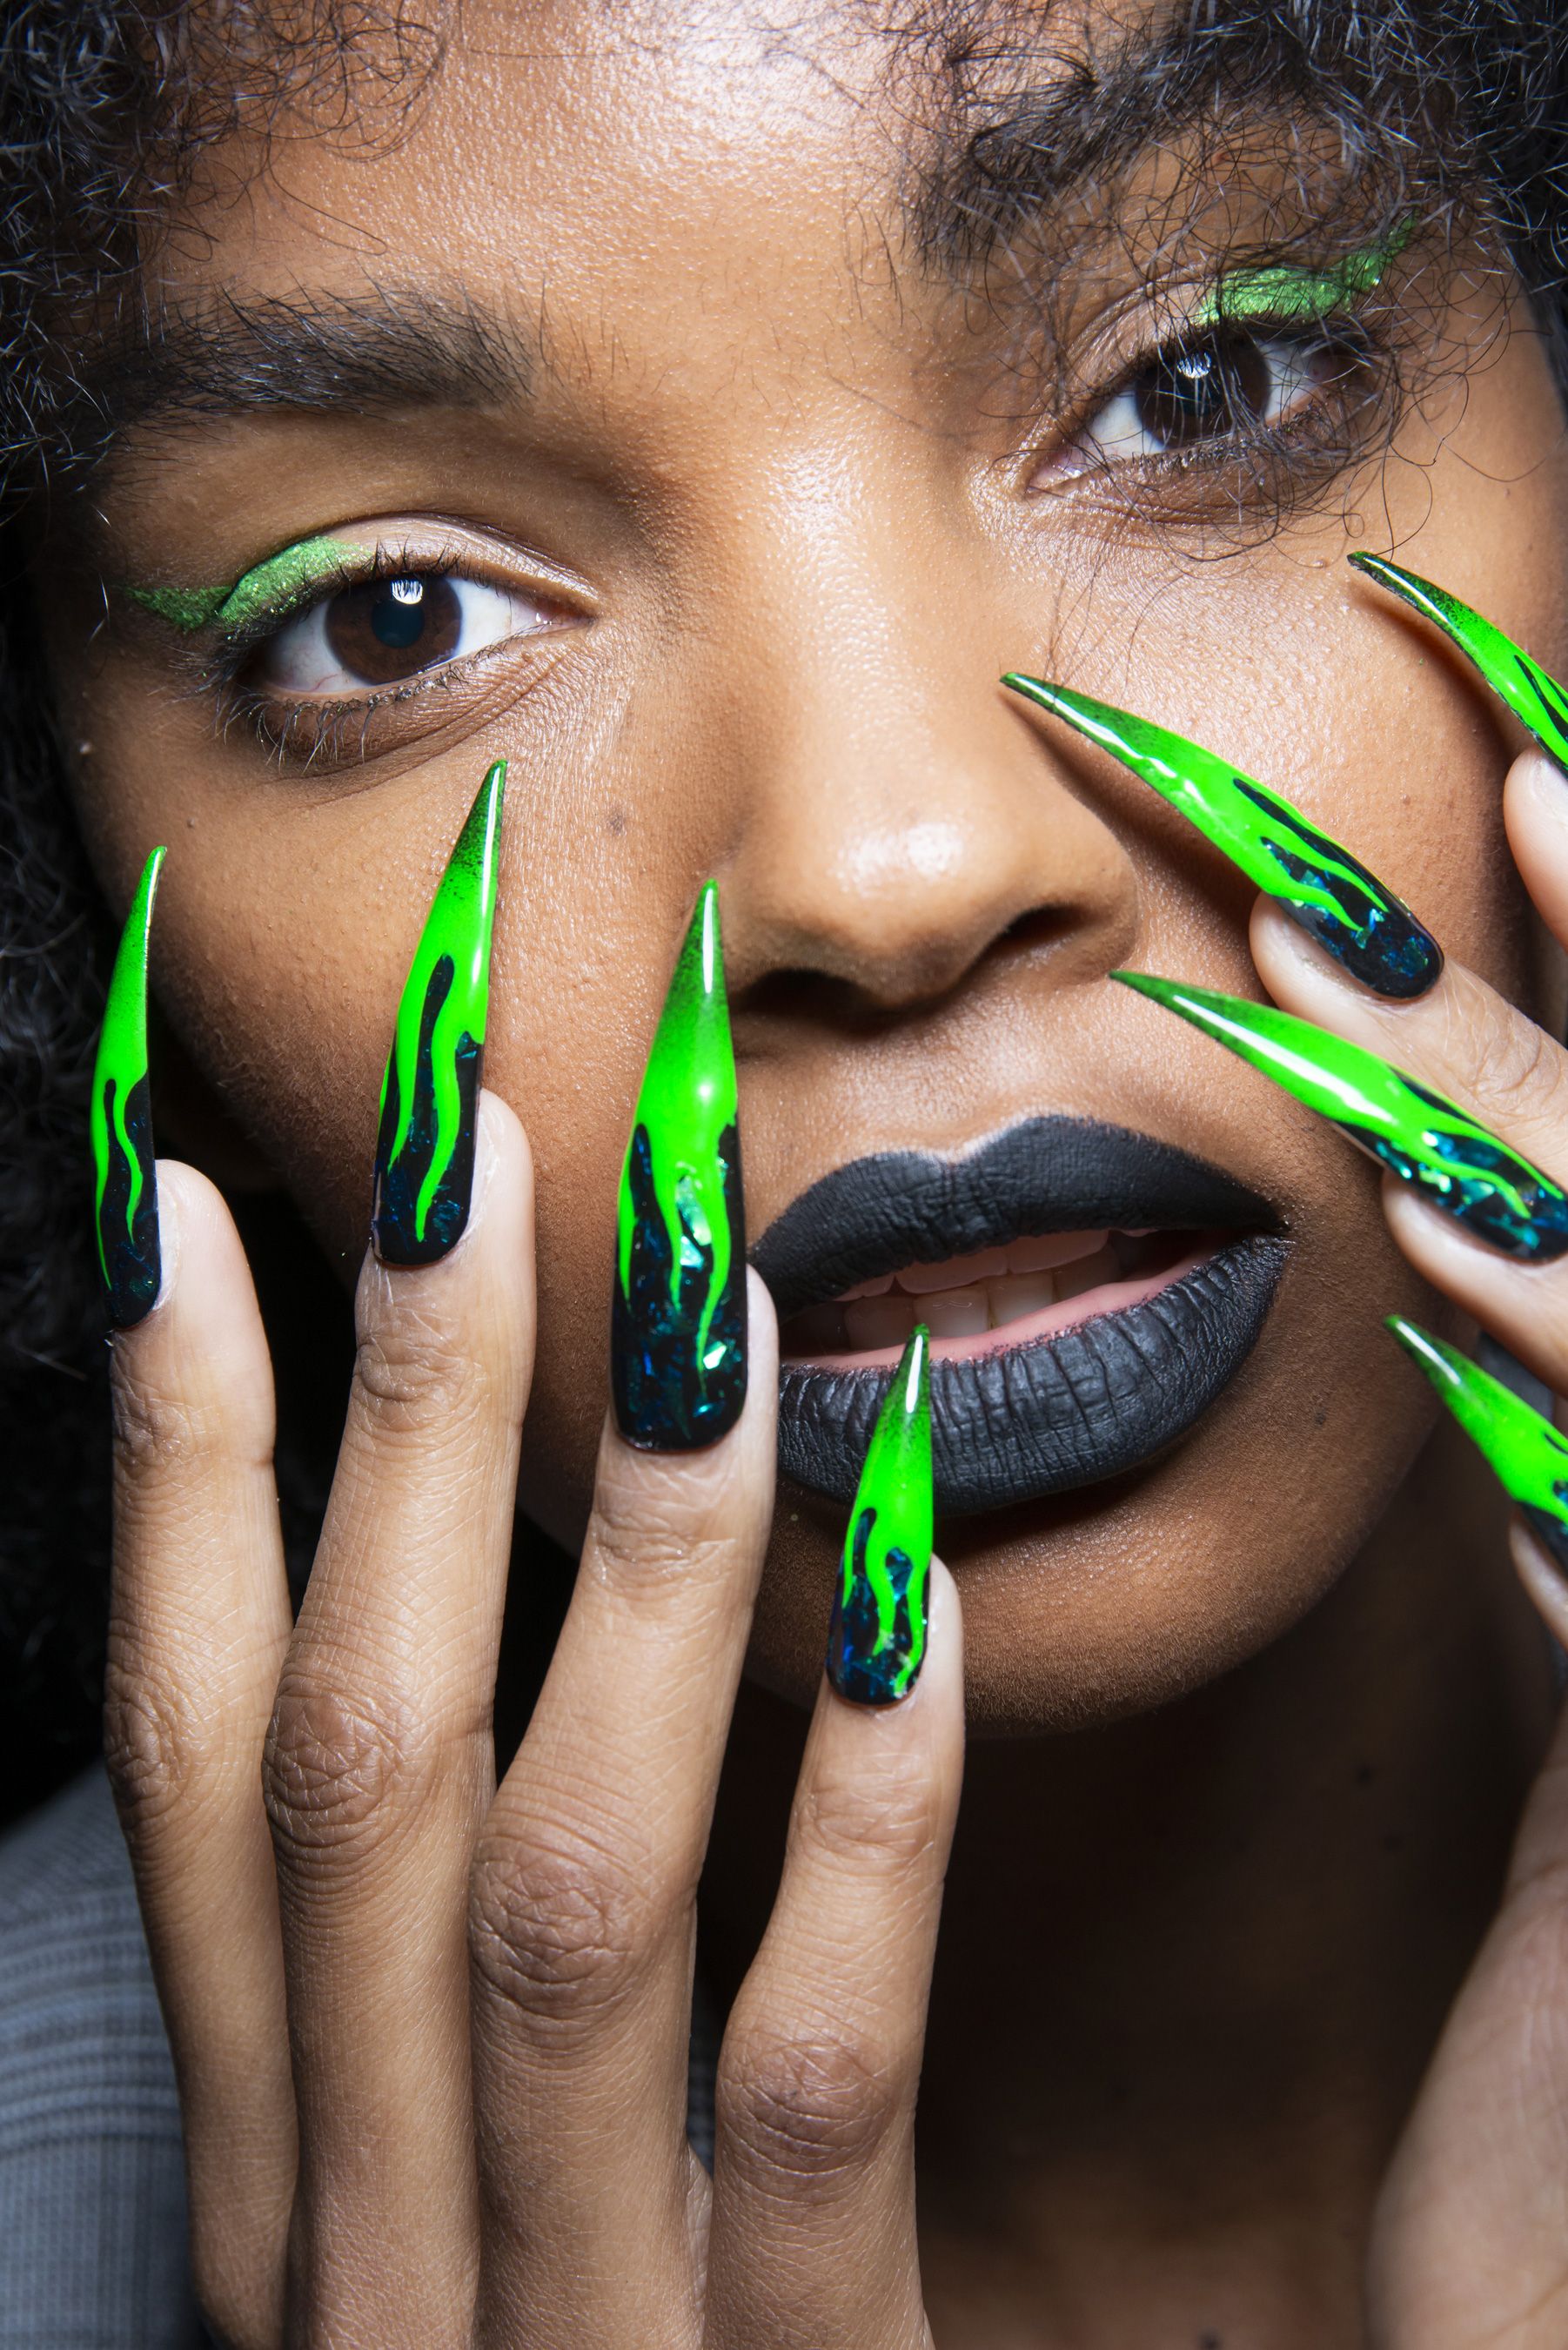 All About Nails - Black & green 💅🏻 #allaboutnails #nagelsalon #almelo  #acrylicnails #black #green #nails #marble #glitter #emeraldnails  #nailsofinstagram #nailinspo #nailtech | Facebook